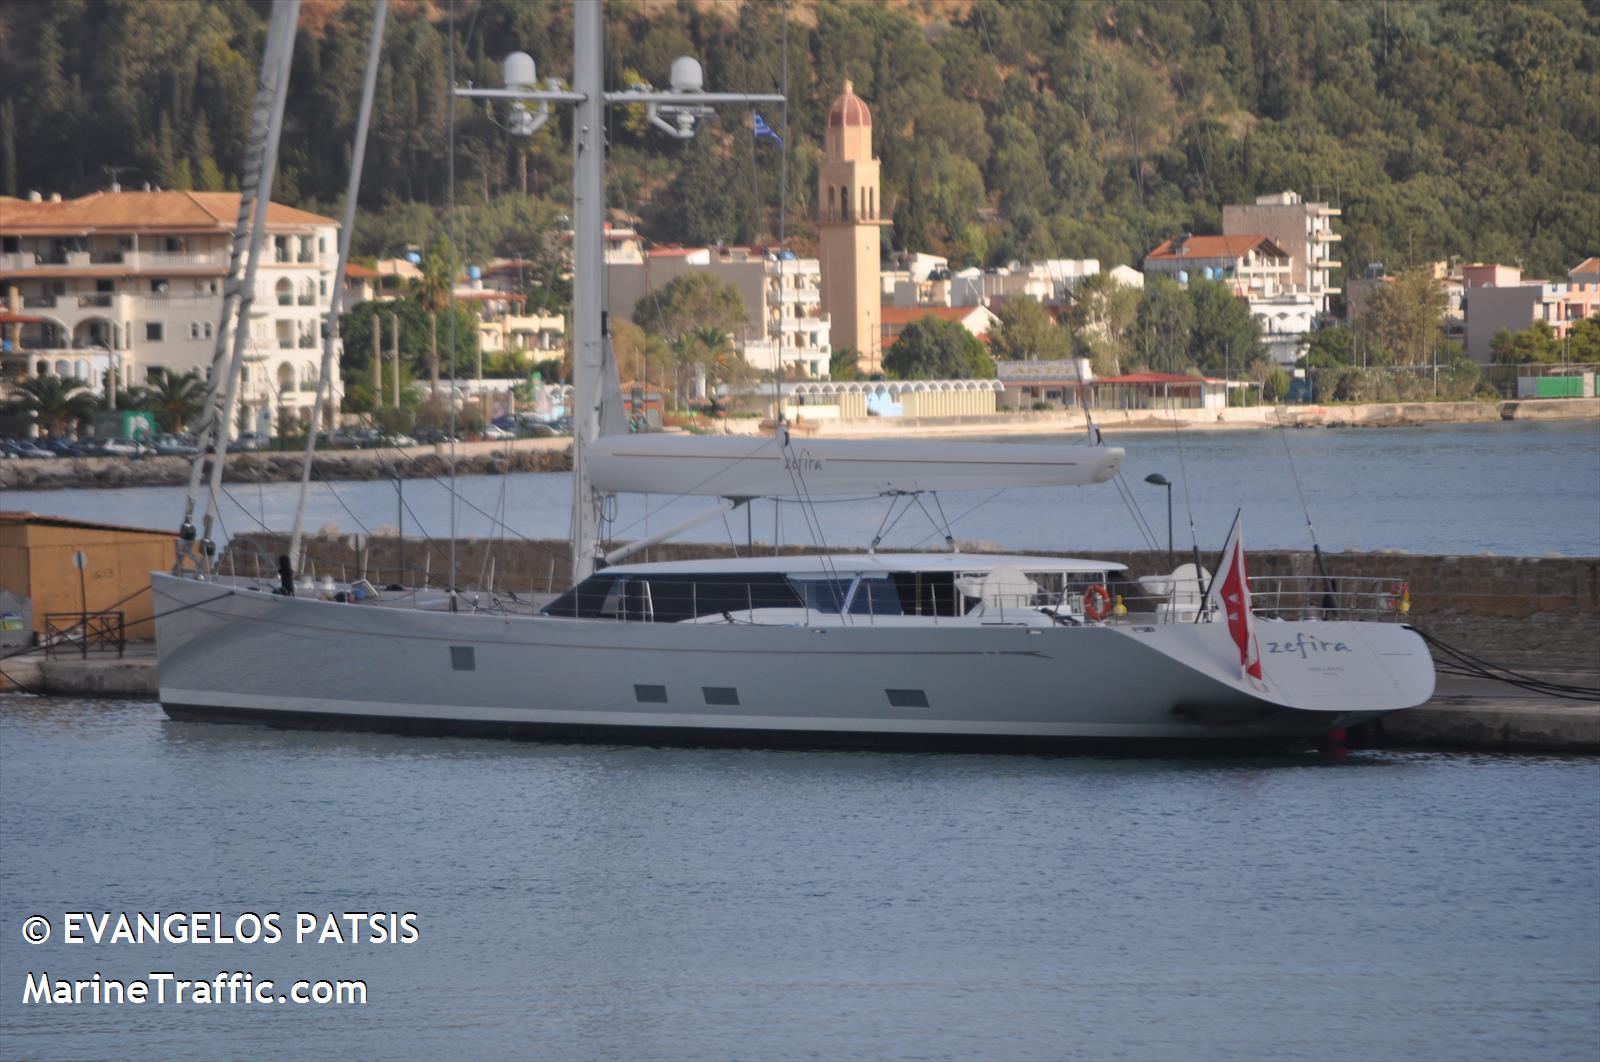 zefira (Yacht) - IMO 1011094, MMSI 248663000, Call Sign 9HA2459 under the flag of Malta